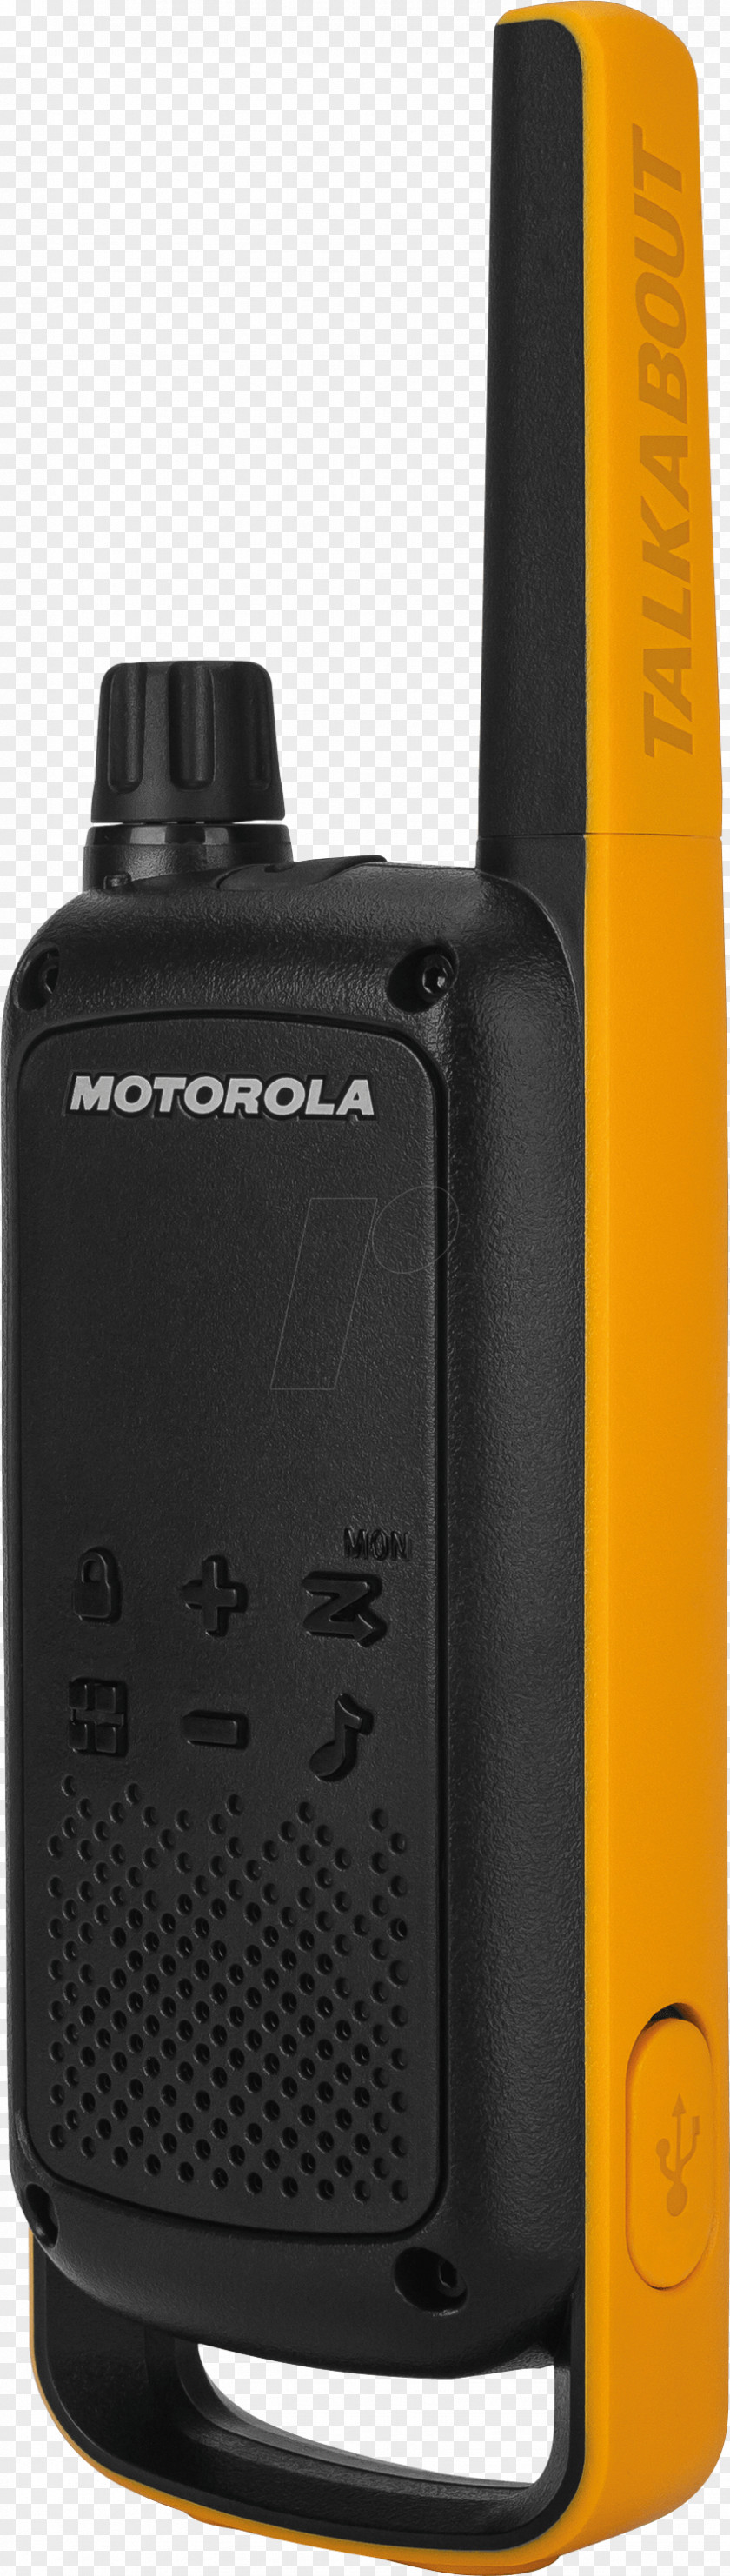 Walkie Talkie Motorola Talkabout T82 Extreme 188069 PMR446 Walkie-talkie Two-way Radio Professional Mobile PNG